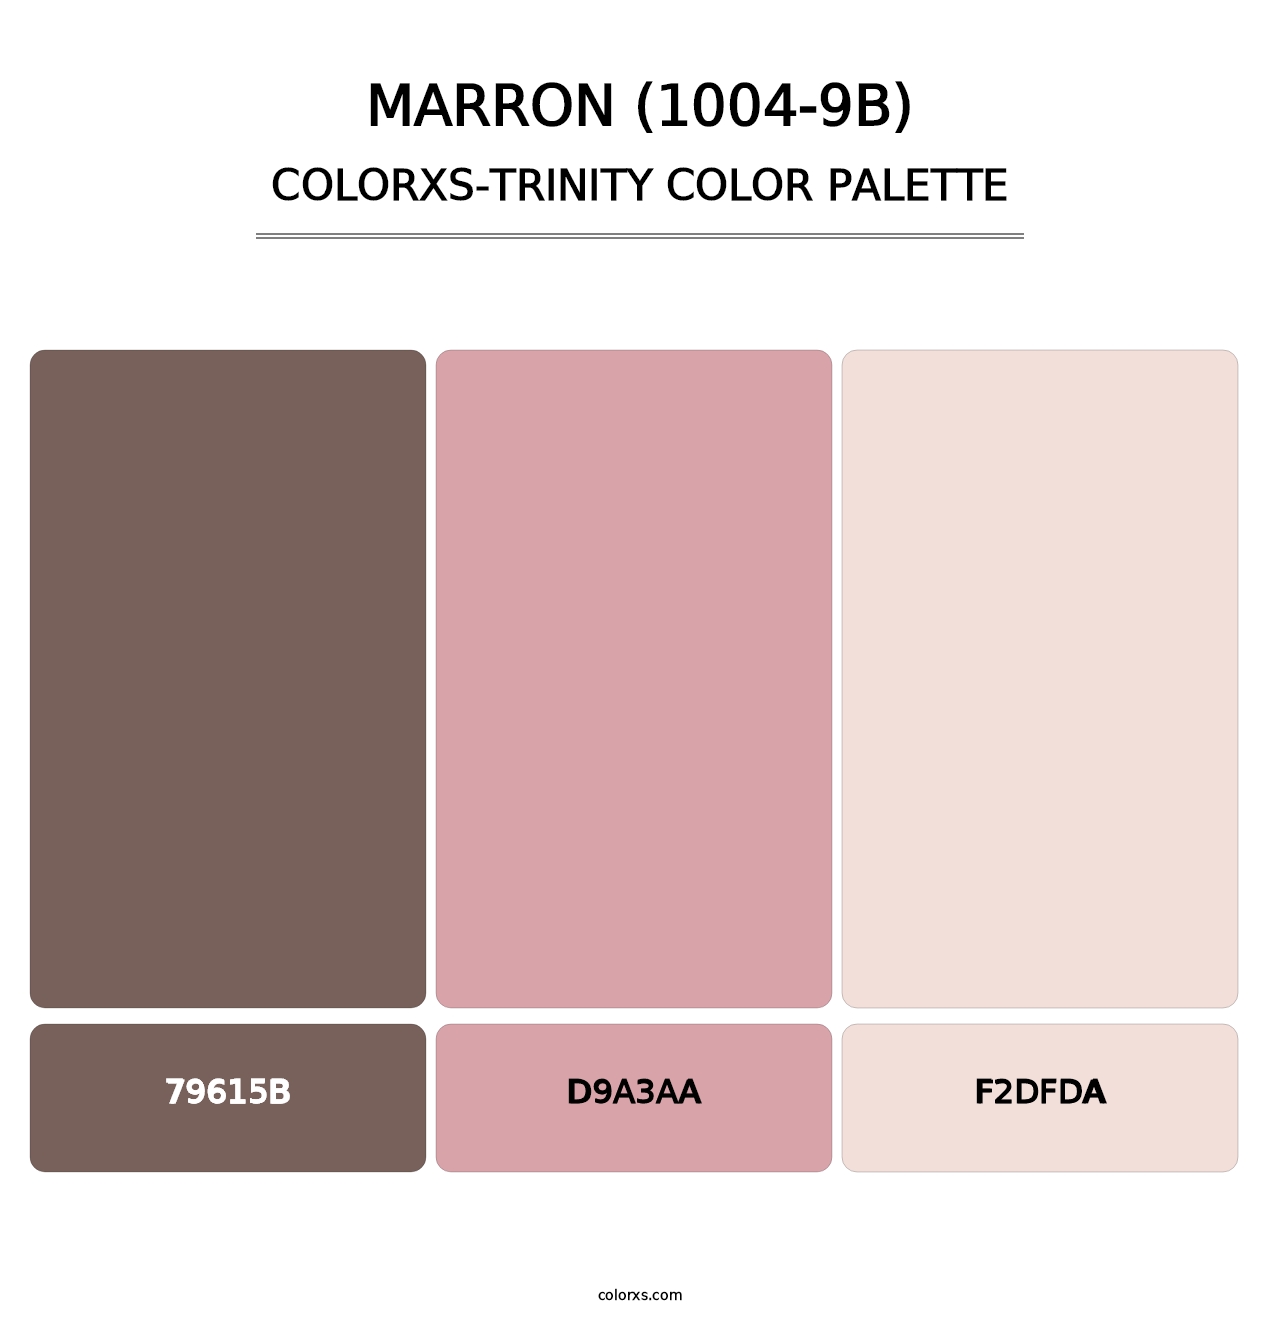 Marron (1004-9B) - Colorxs Trinity Palette